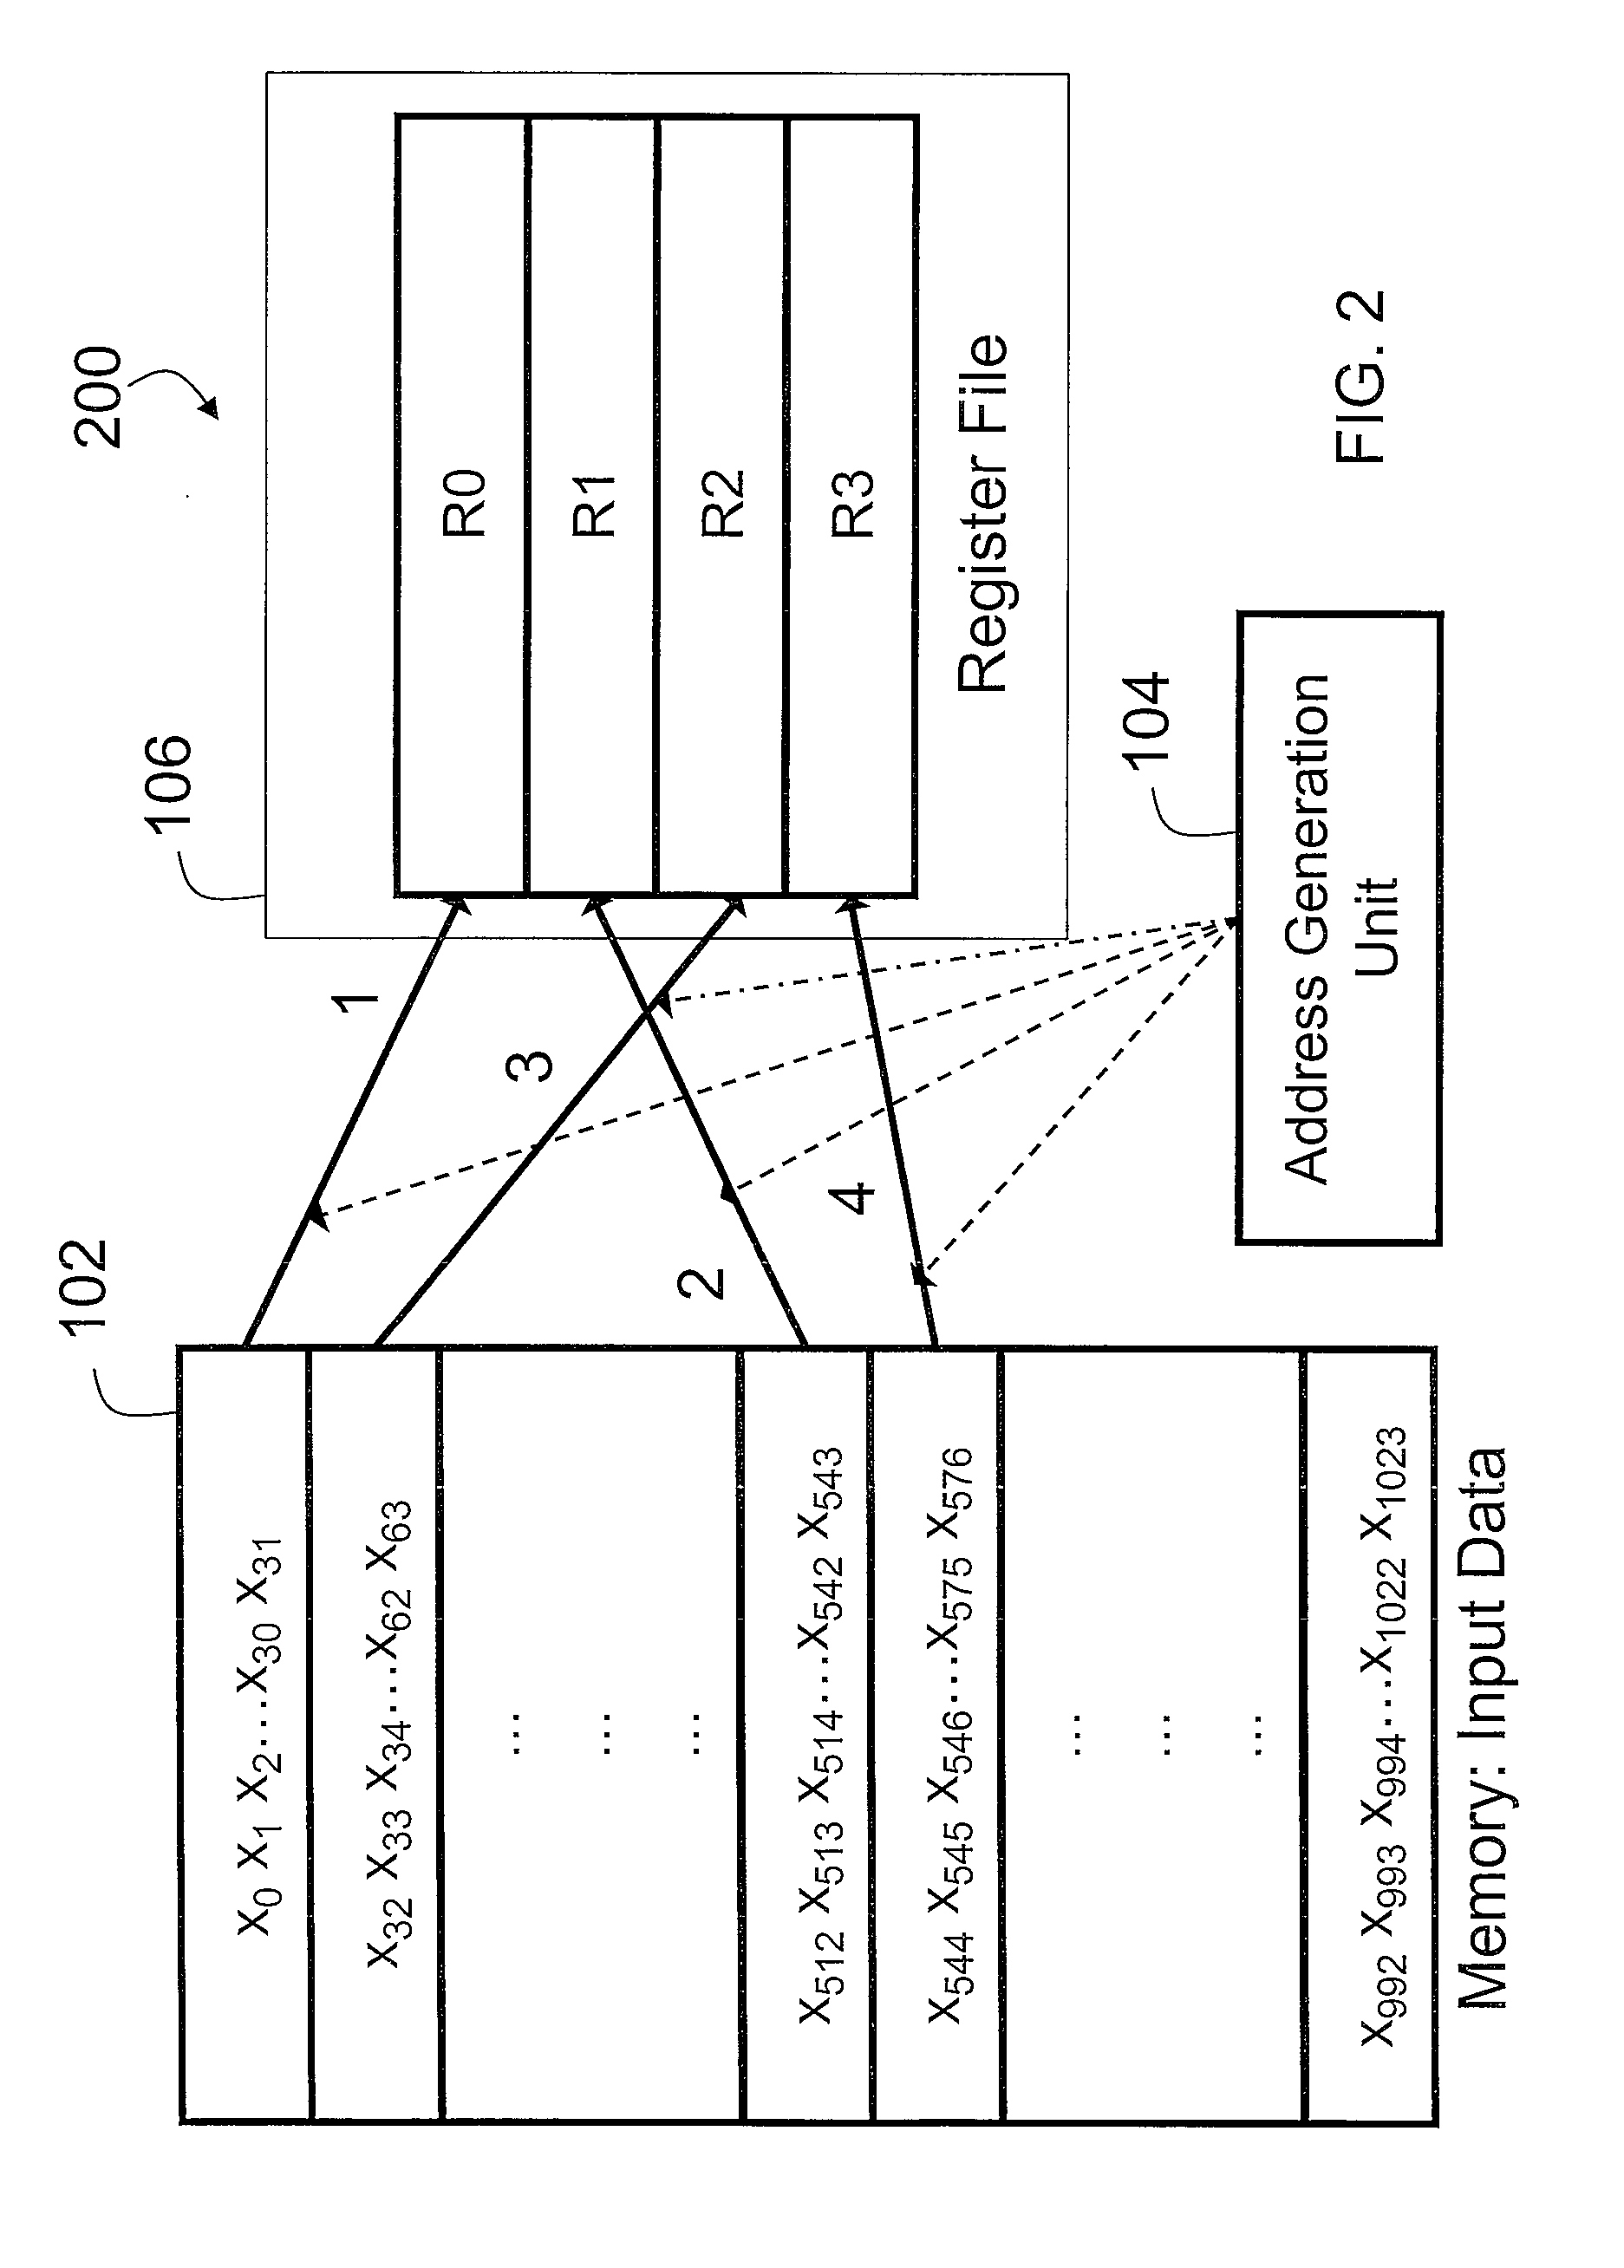 Techniques for performing discrete fourier transforms on radix-2 platforms